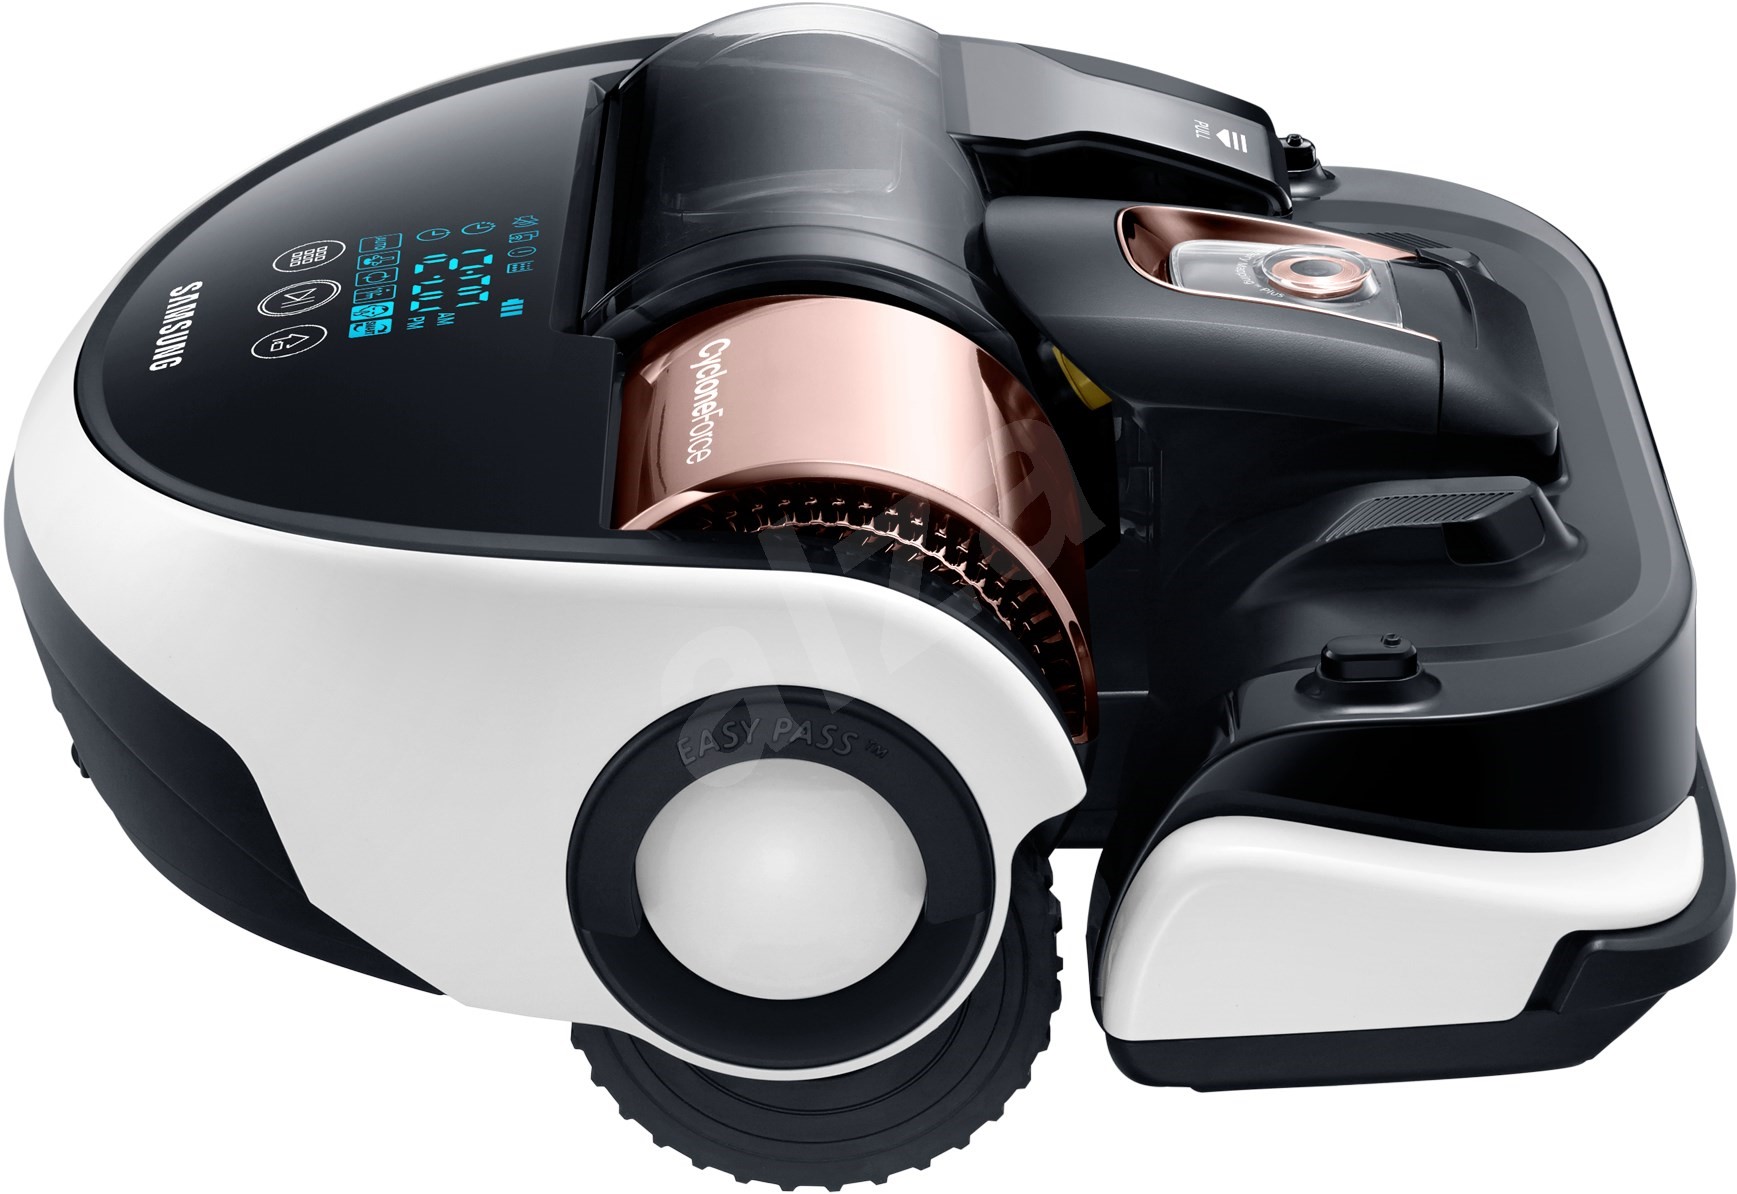 Samsung Powerbot VR9000 - Robotic Vacuum Cleaner ...